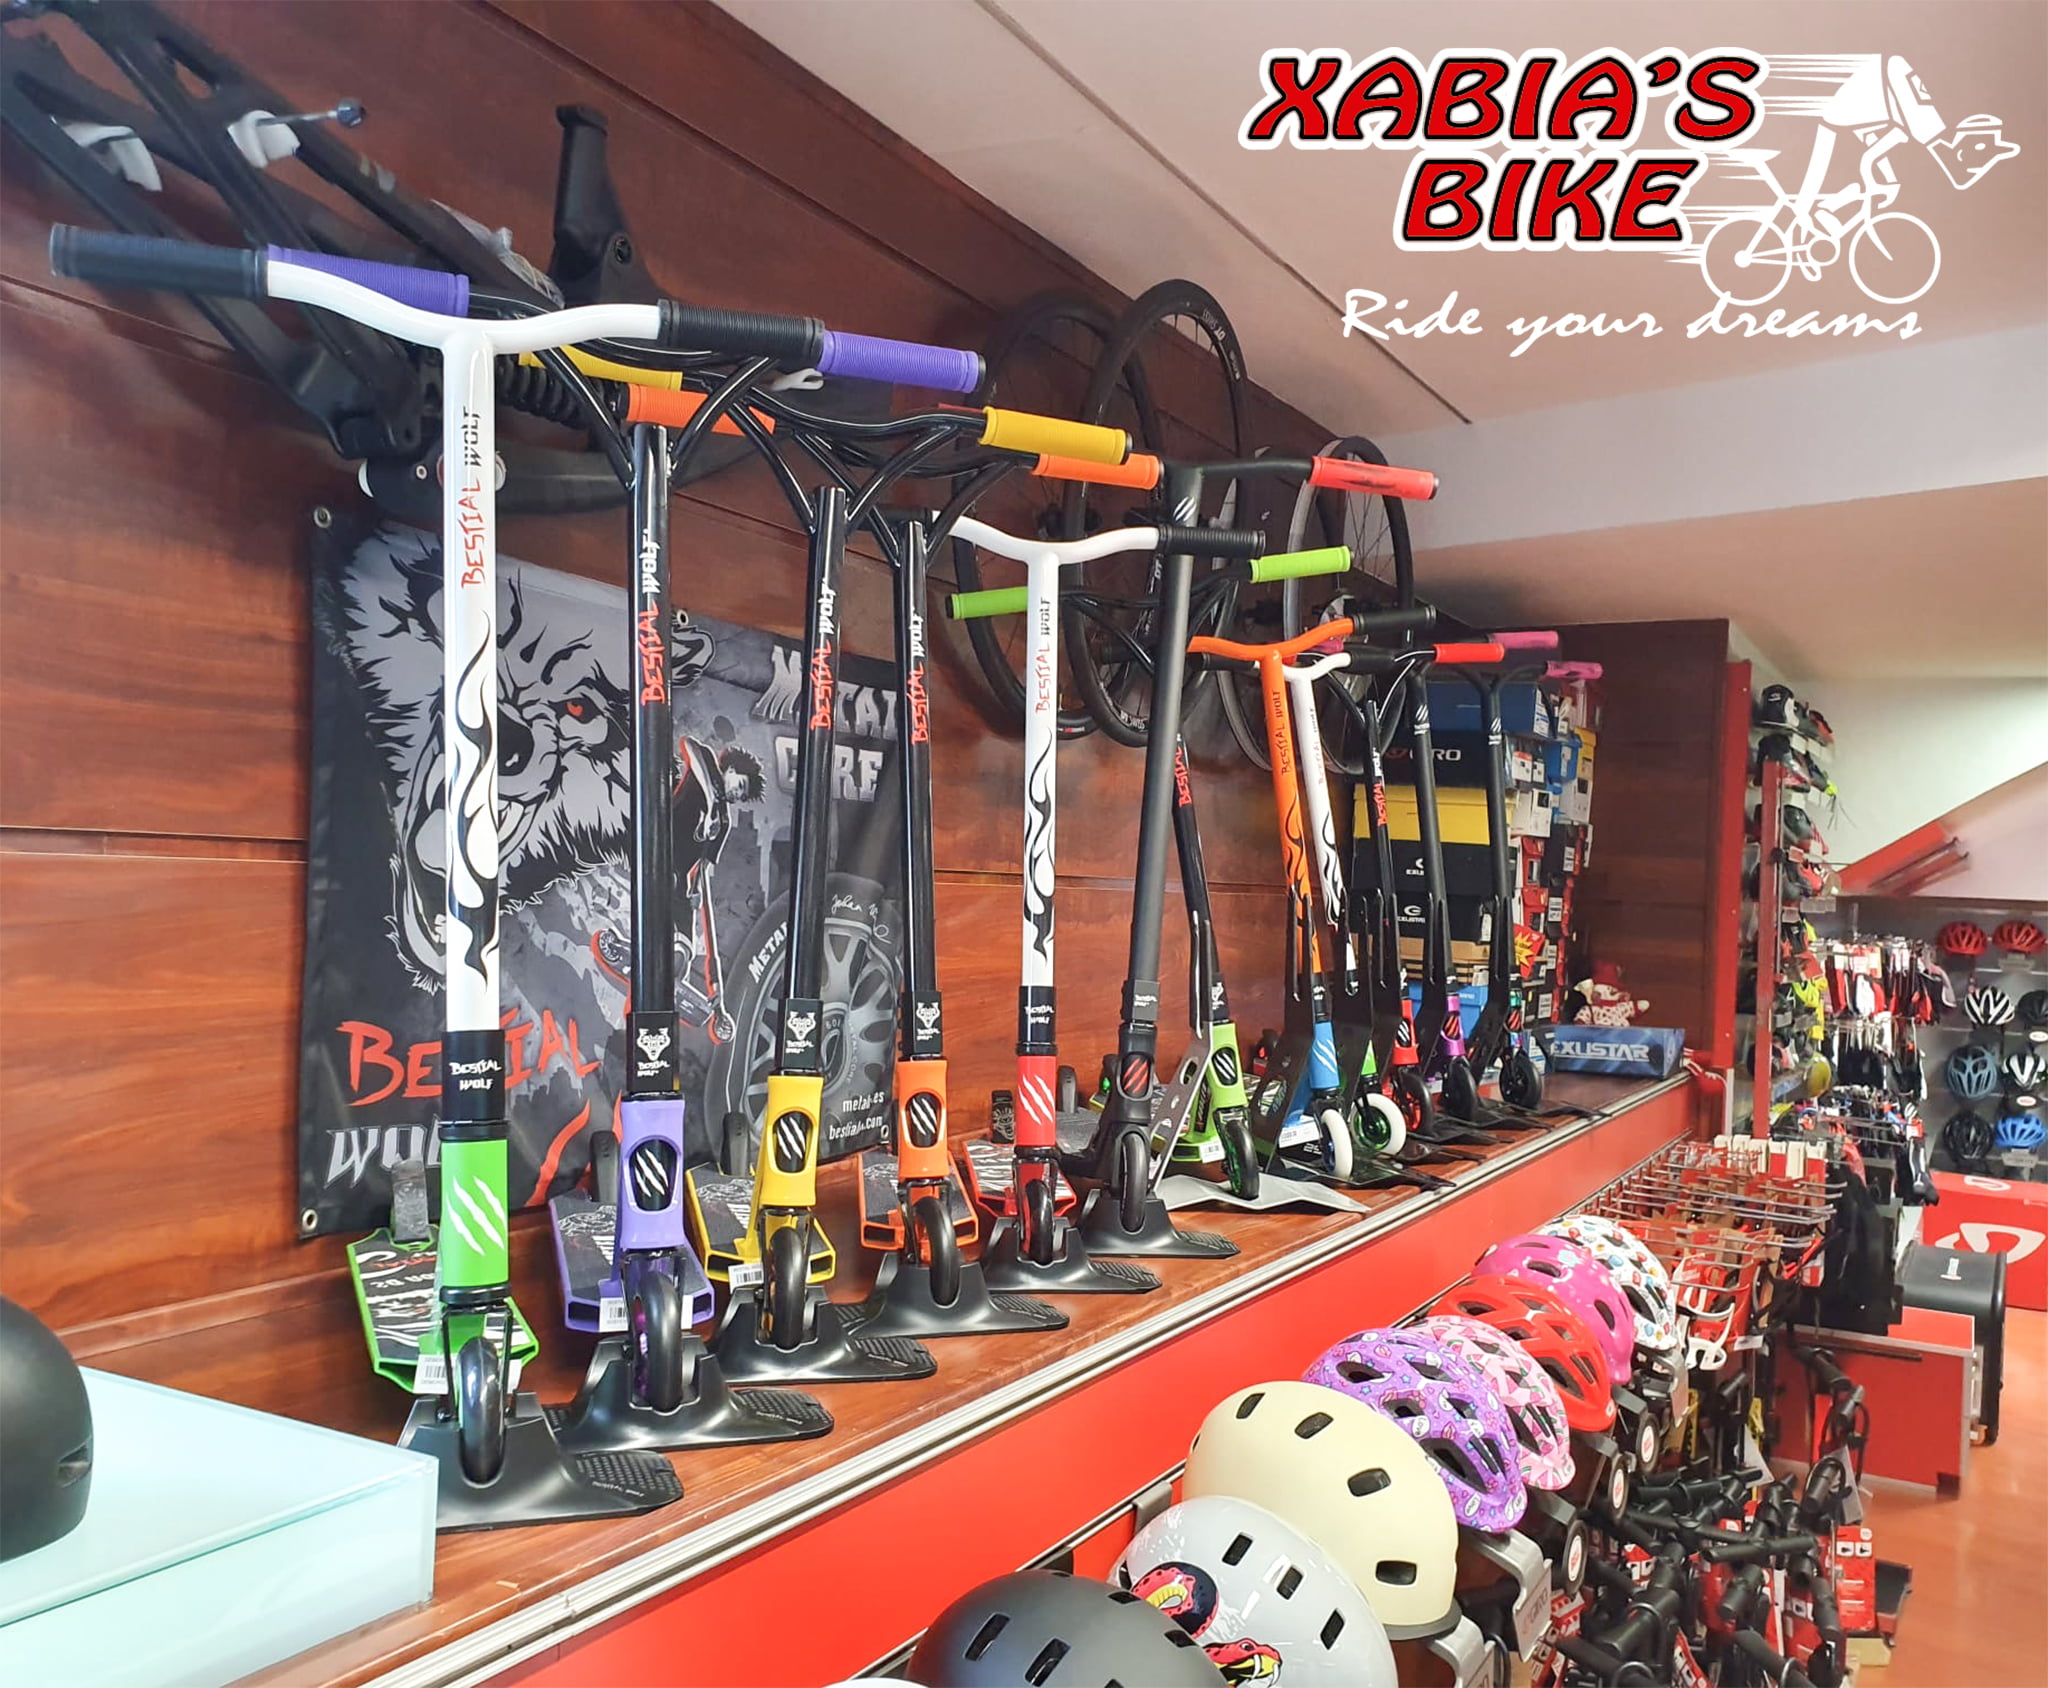 Xabia’s Bike – Gran variedad de patinetes